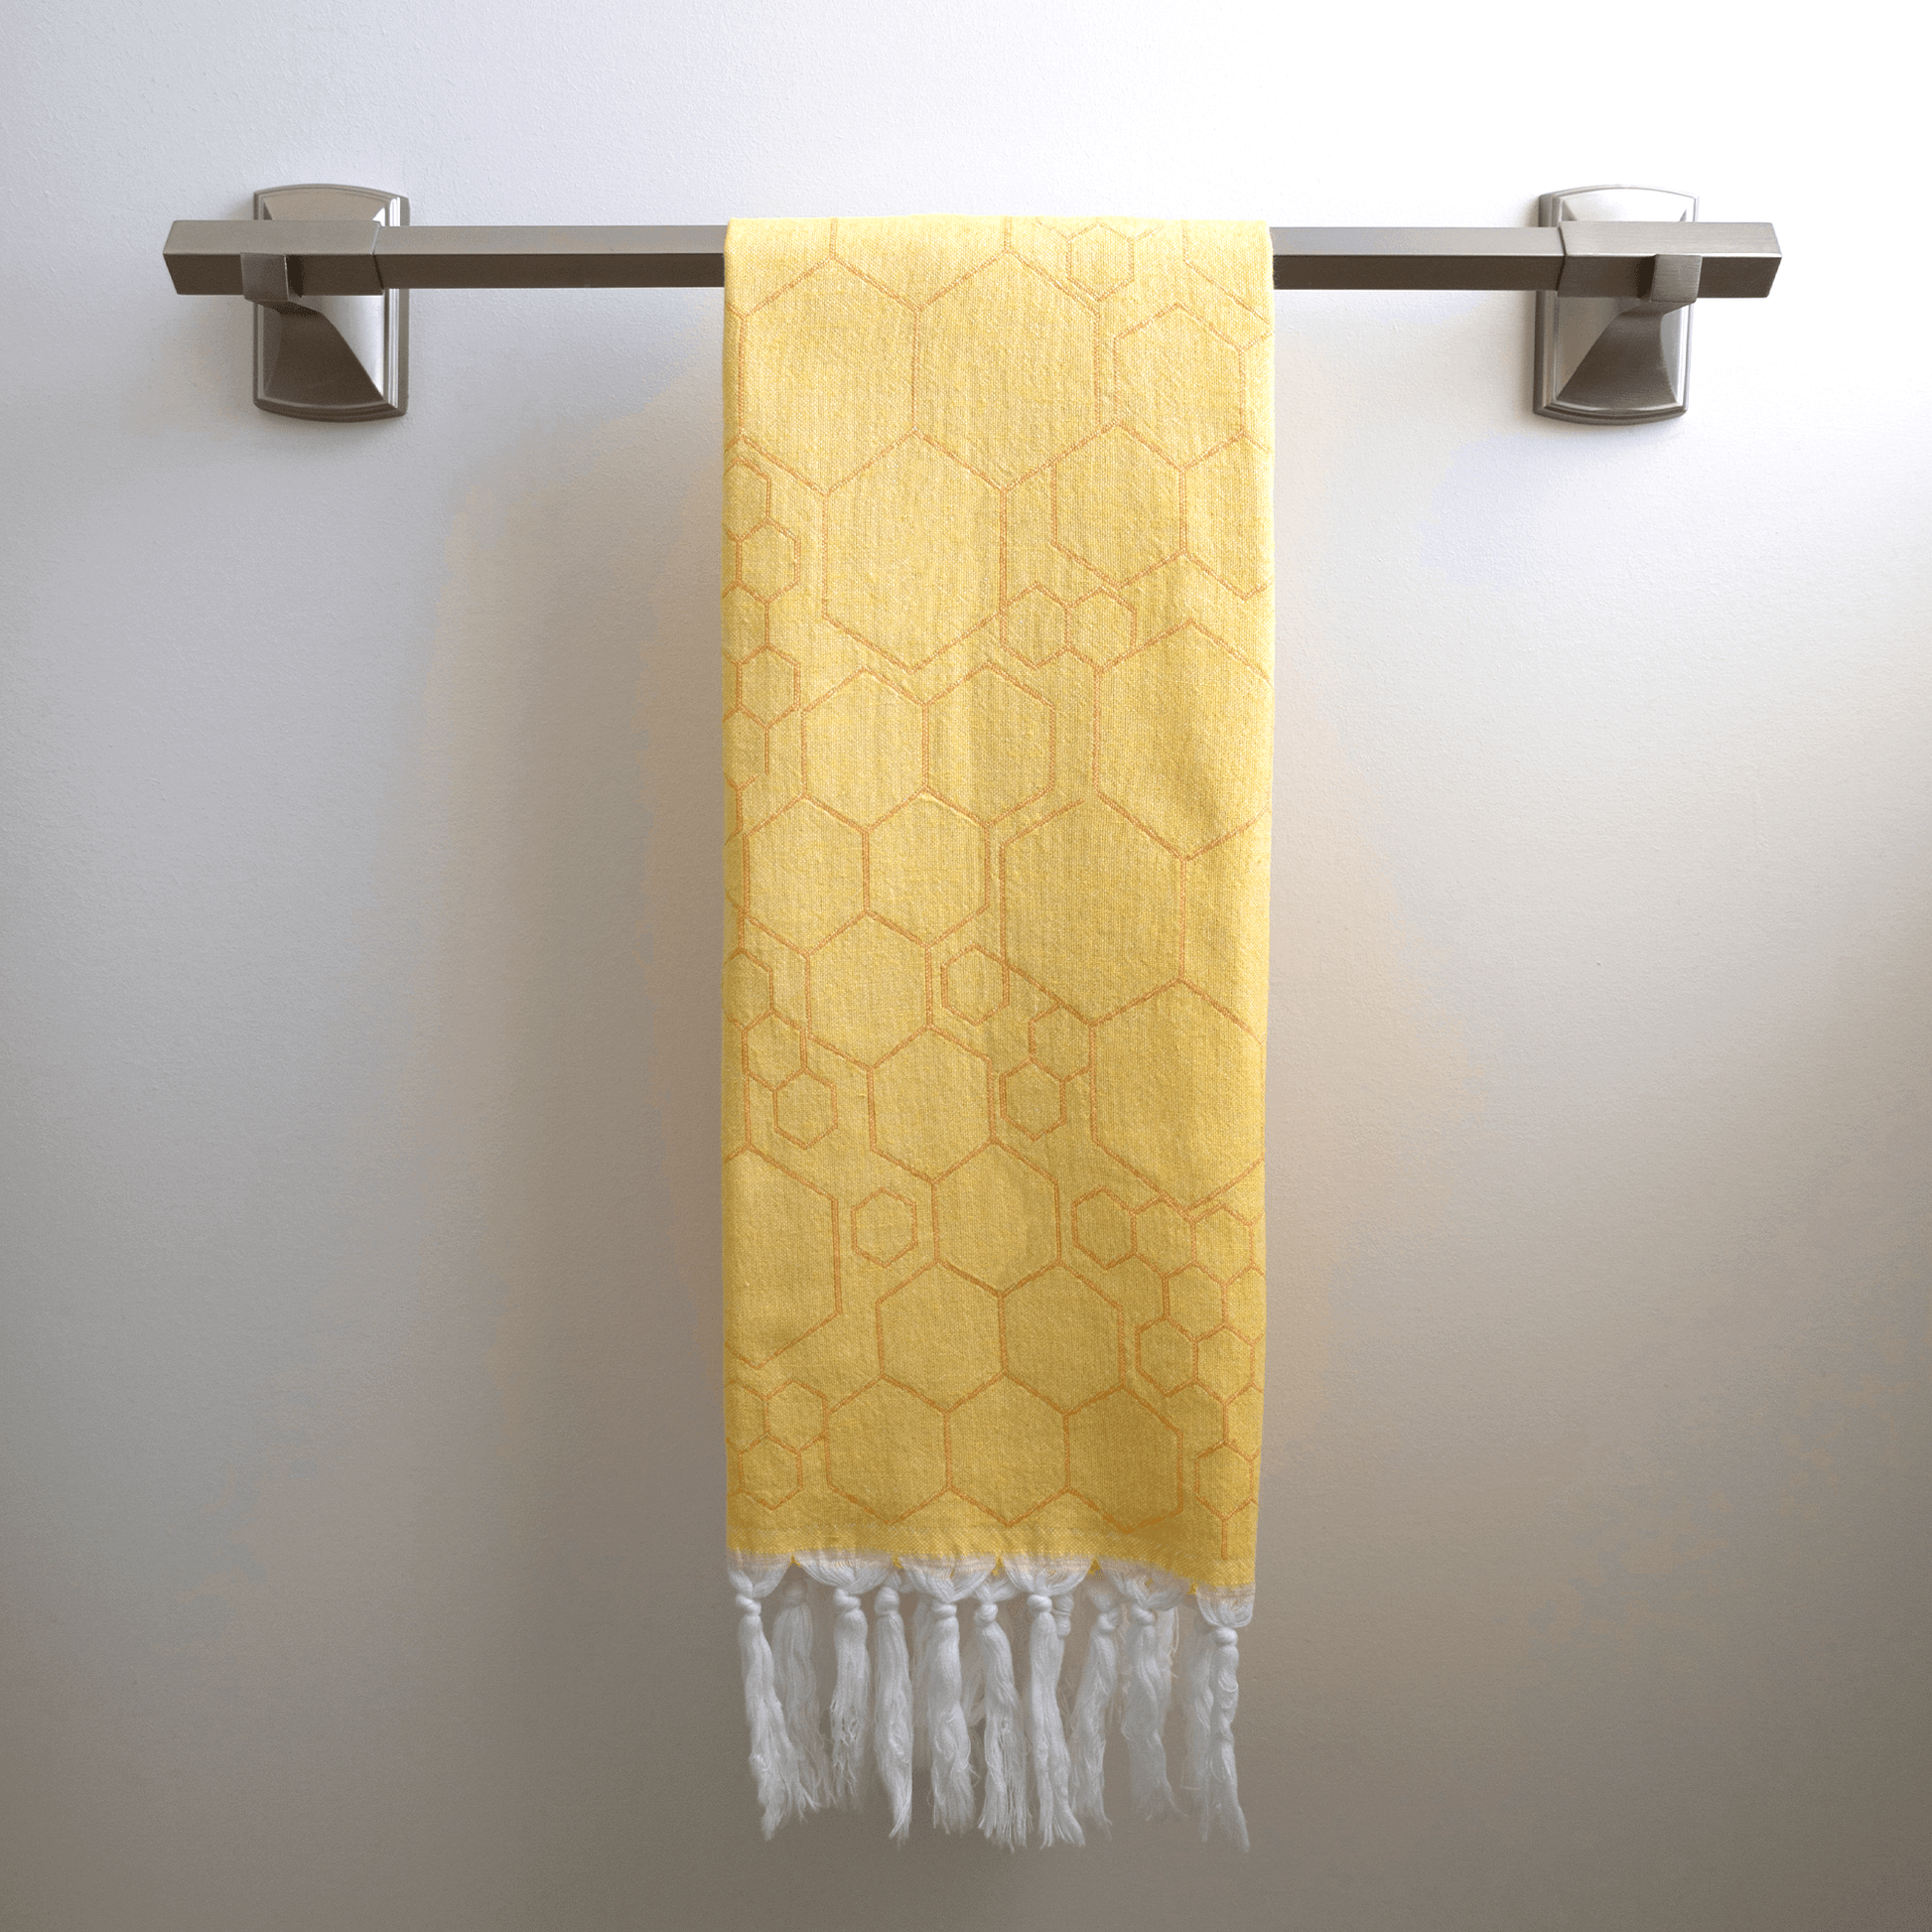  Yellow Turkish hand towel on the towel rack